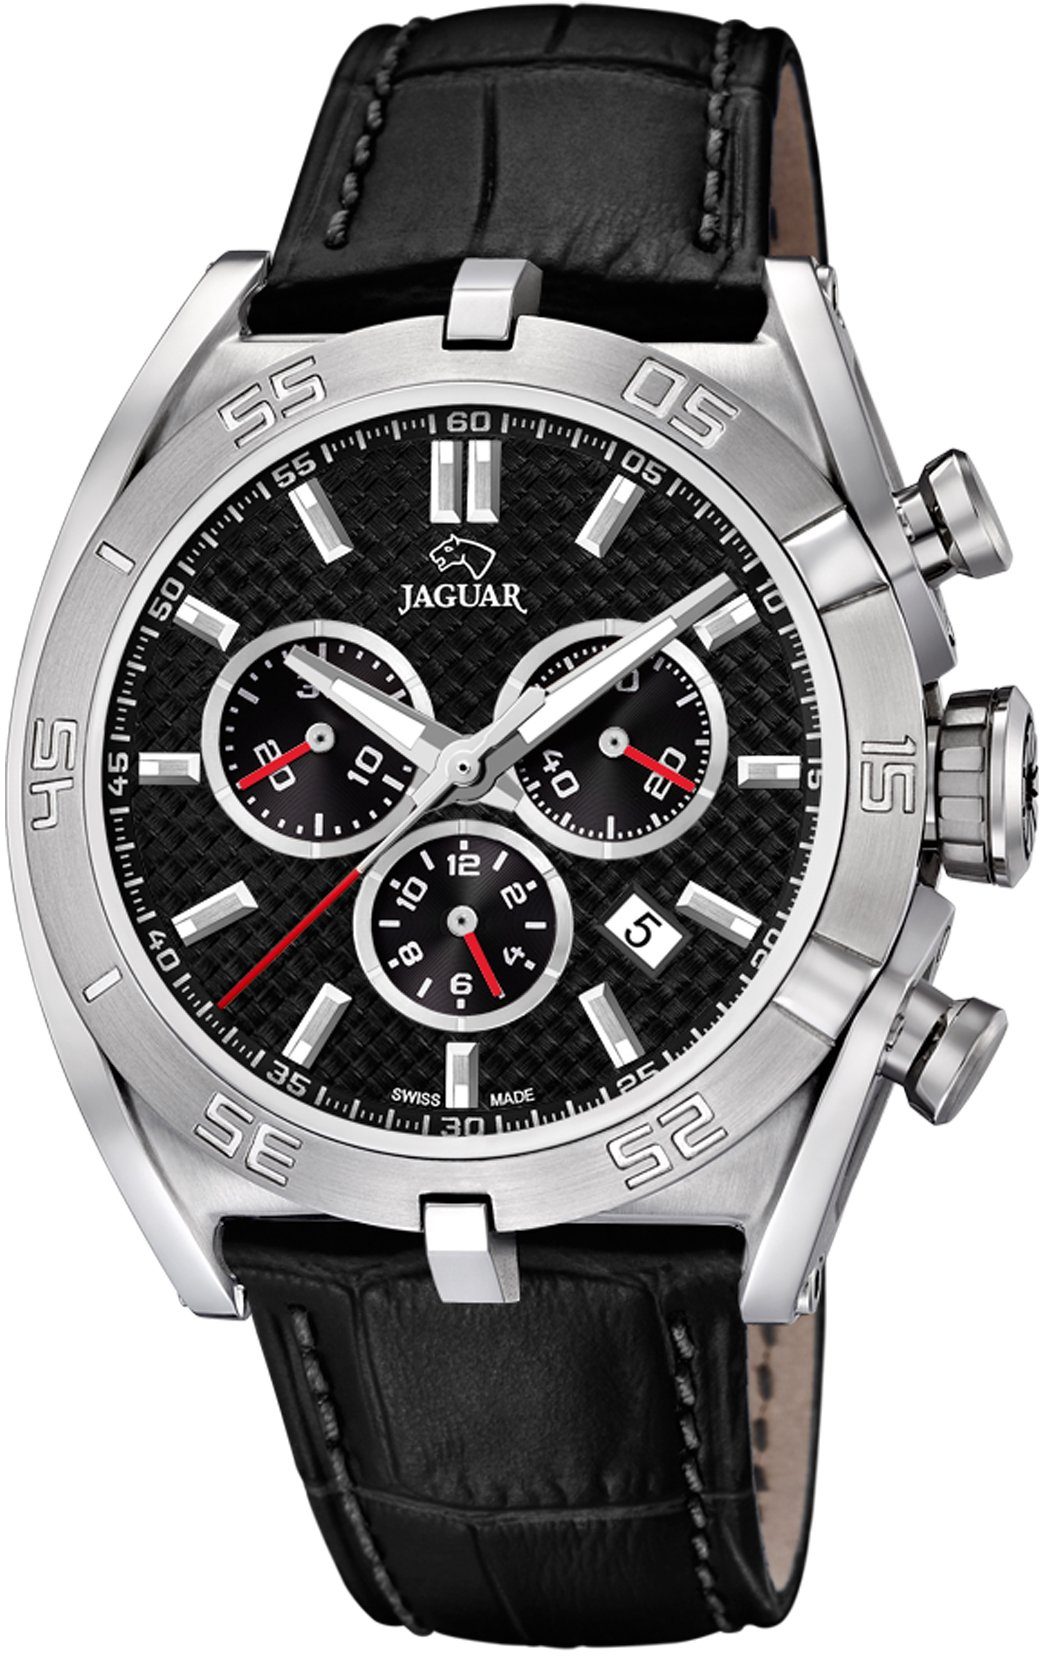 Jaguar Chronograph Executive, J857/4, Armbanduhr, Quarzuhr, Herrenuhr, Saphirglas, Stoppfunktion, Swiss Made